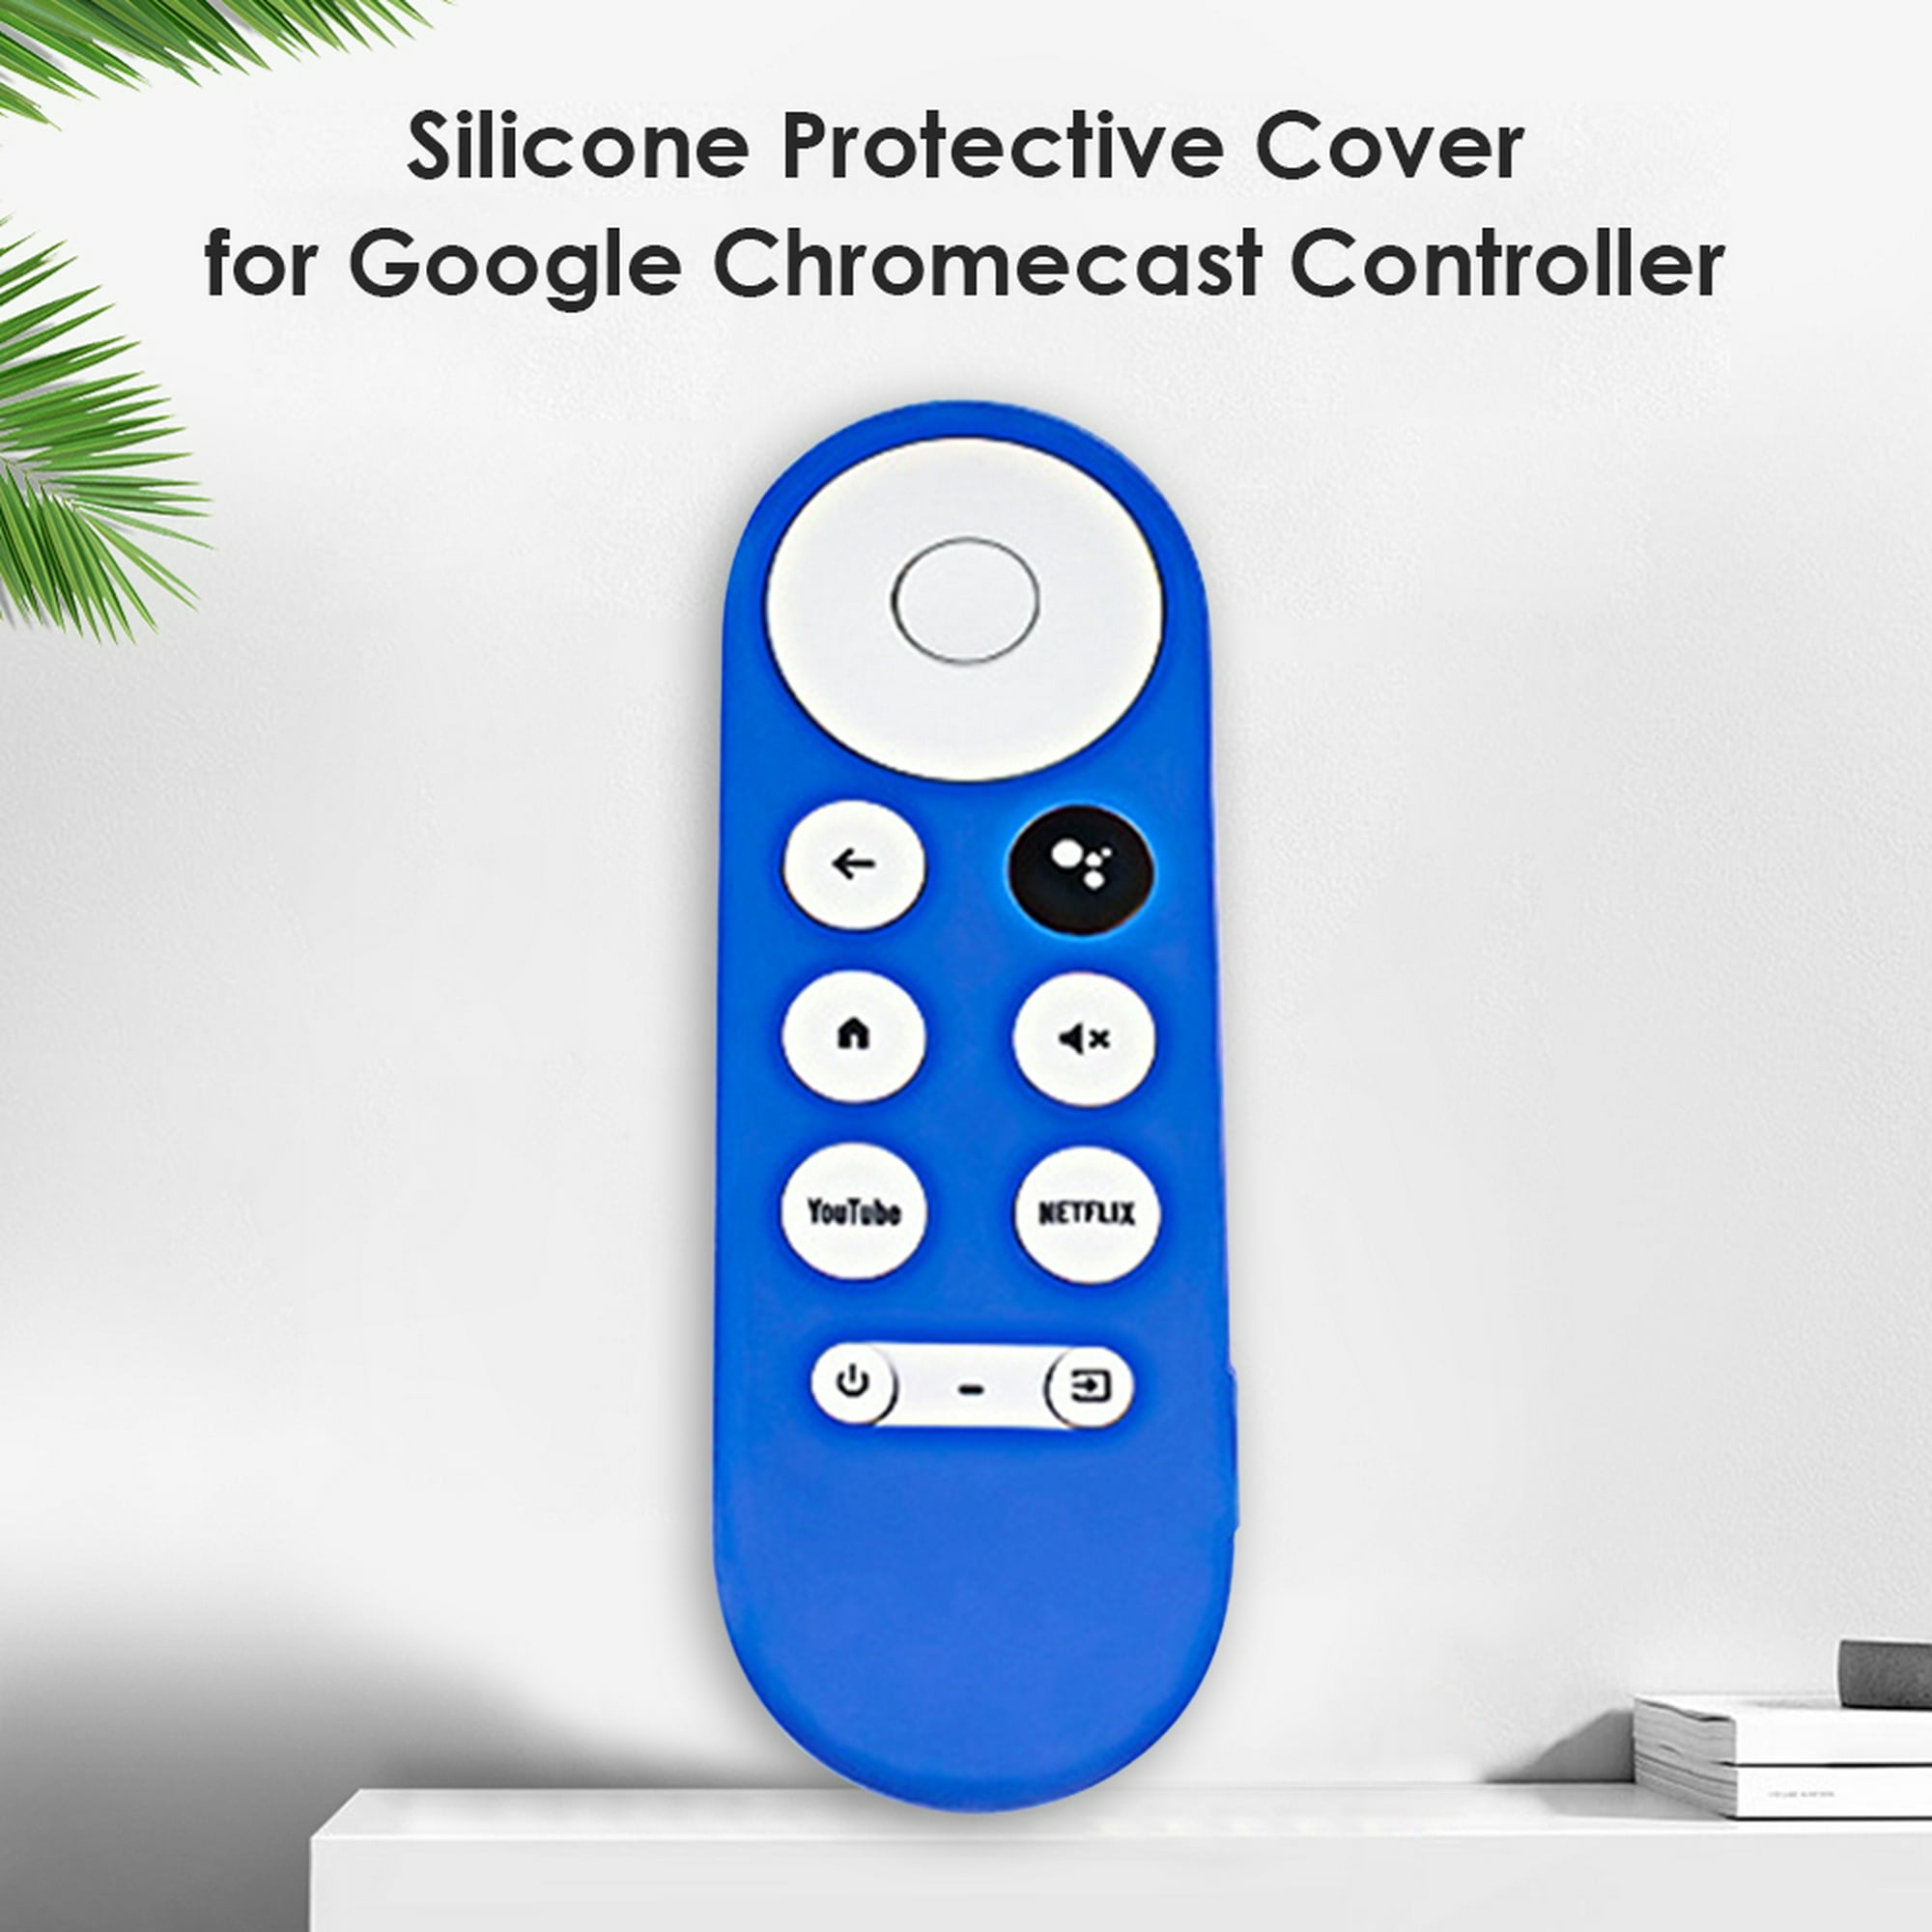 Chromecast con Google TV (2020) y Mando a Distancia por Voz